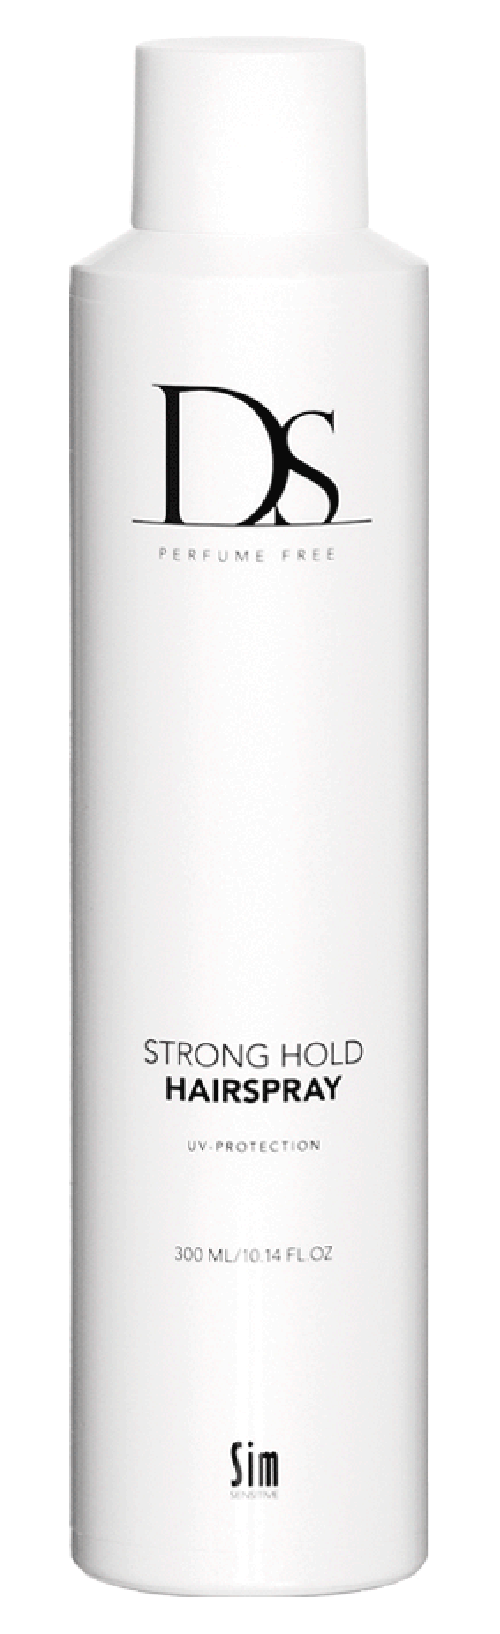 DS Strong Hold Hairspray лак для волос сильной фиксации 300 мл 